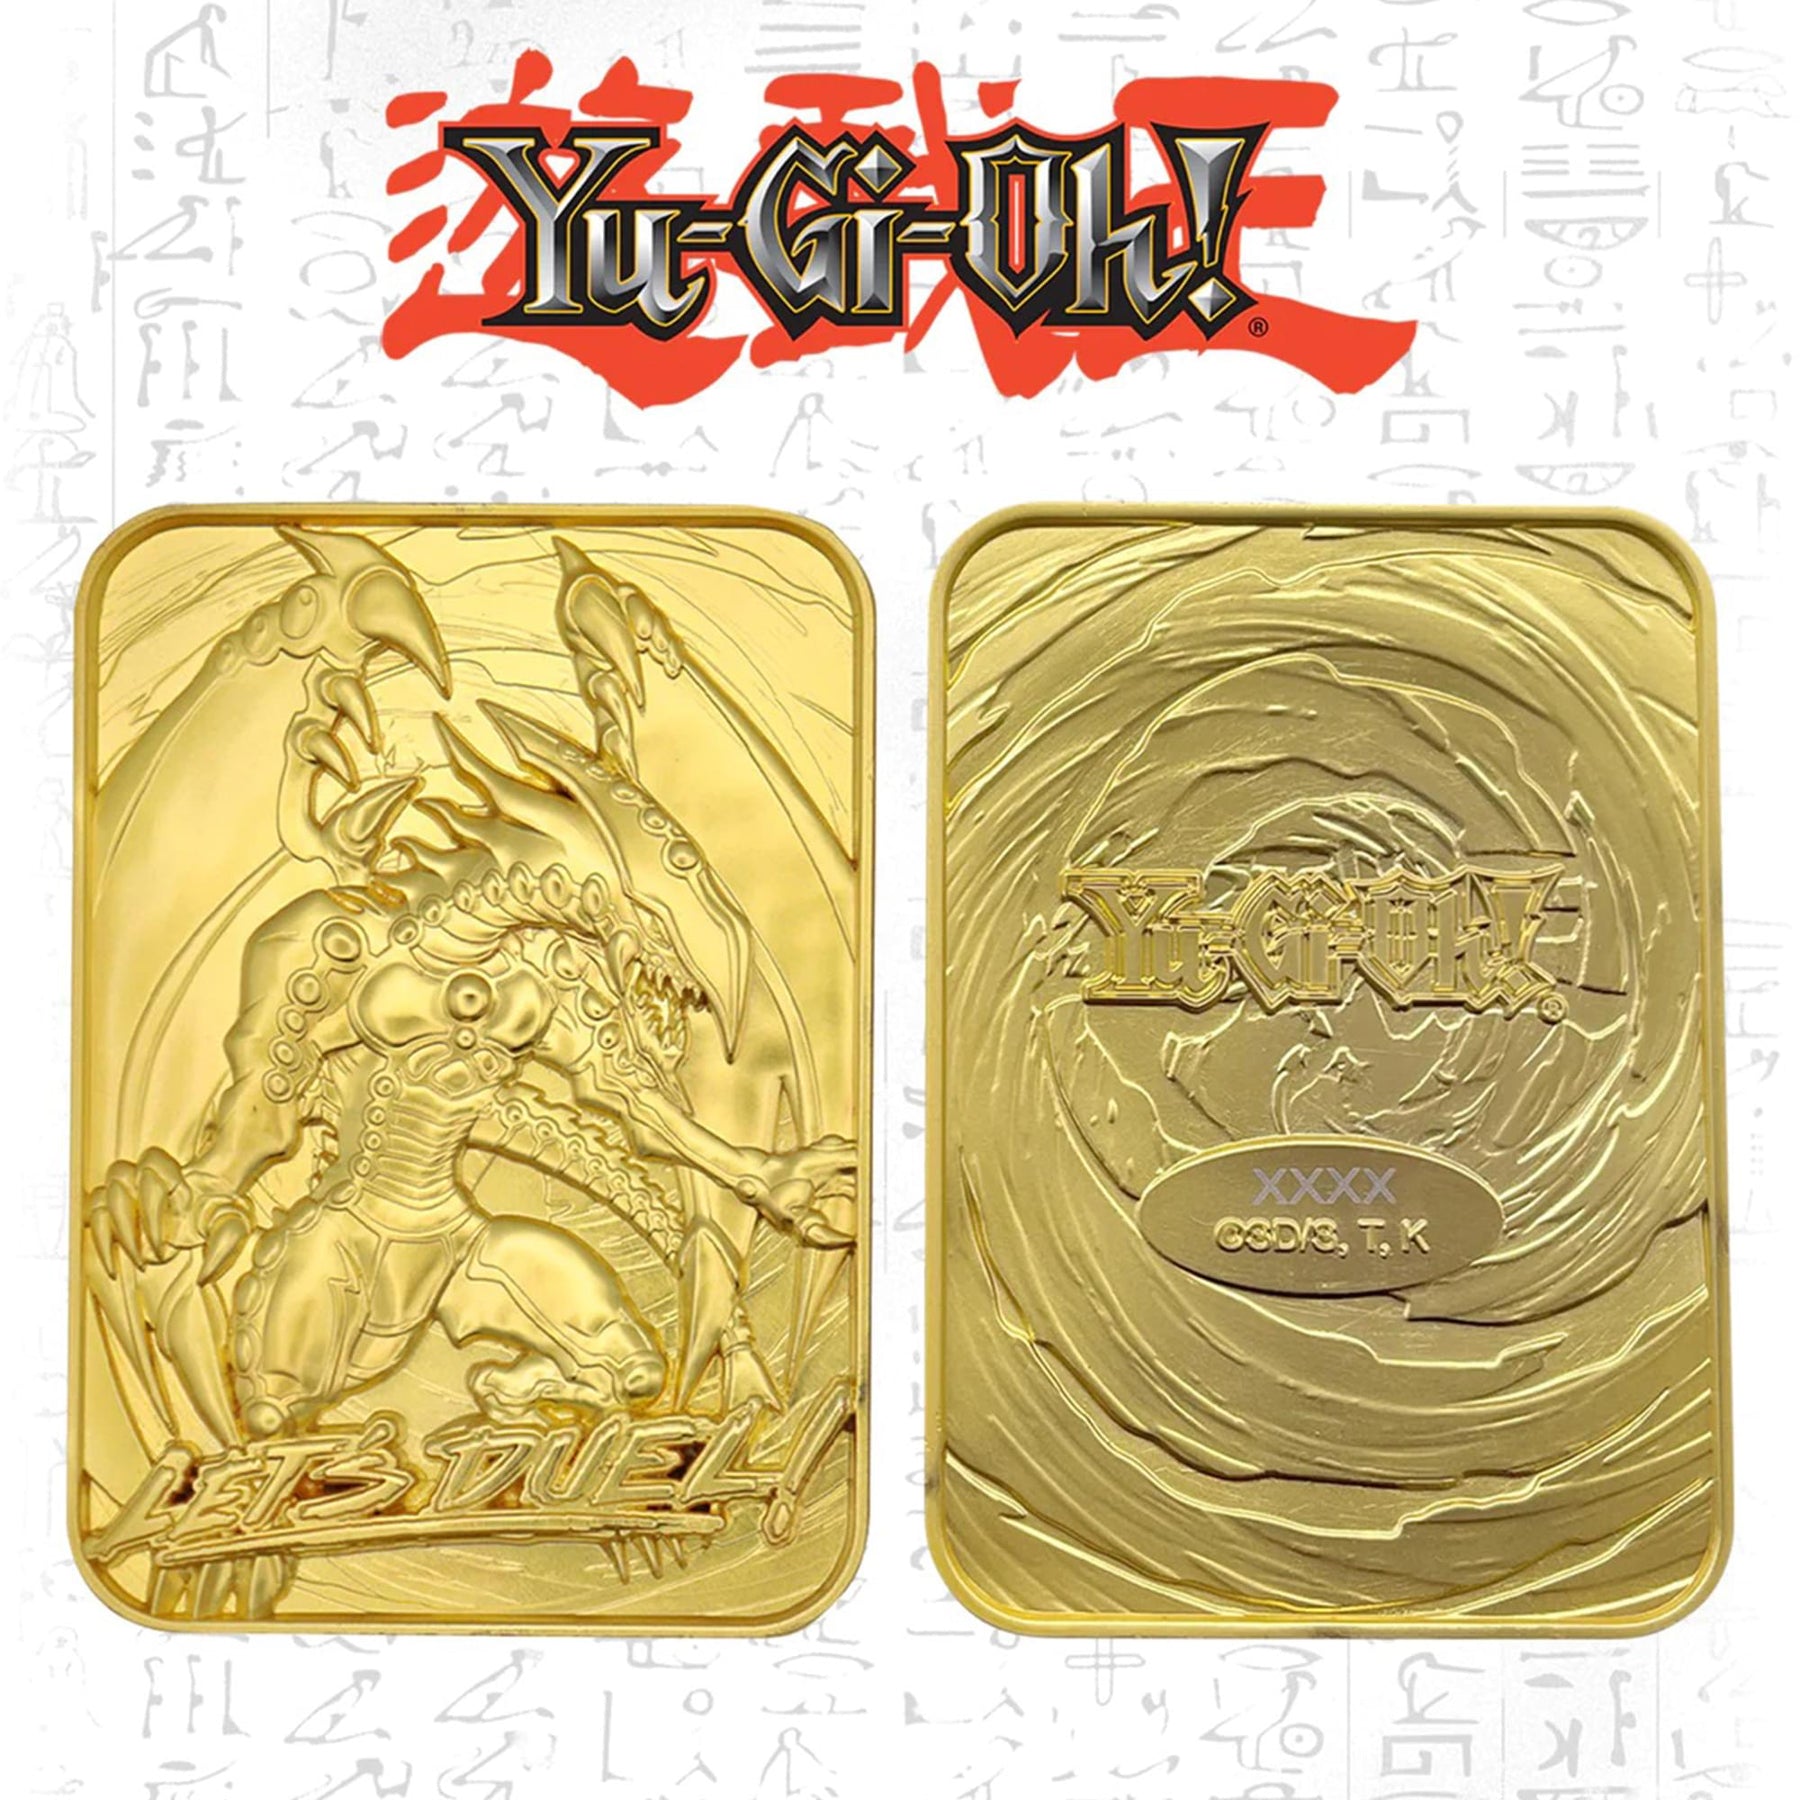 Yu-Gi-Oh! Limited Edition 24k Gold Plated Metal Card | Gandra Dragon